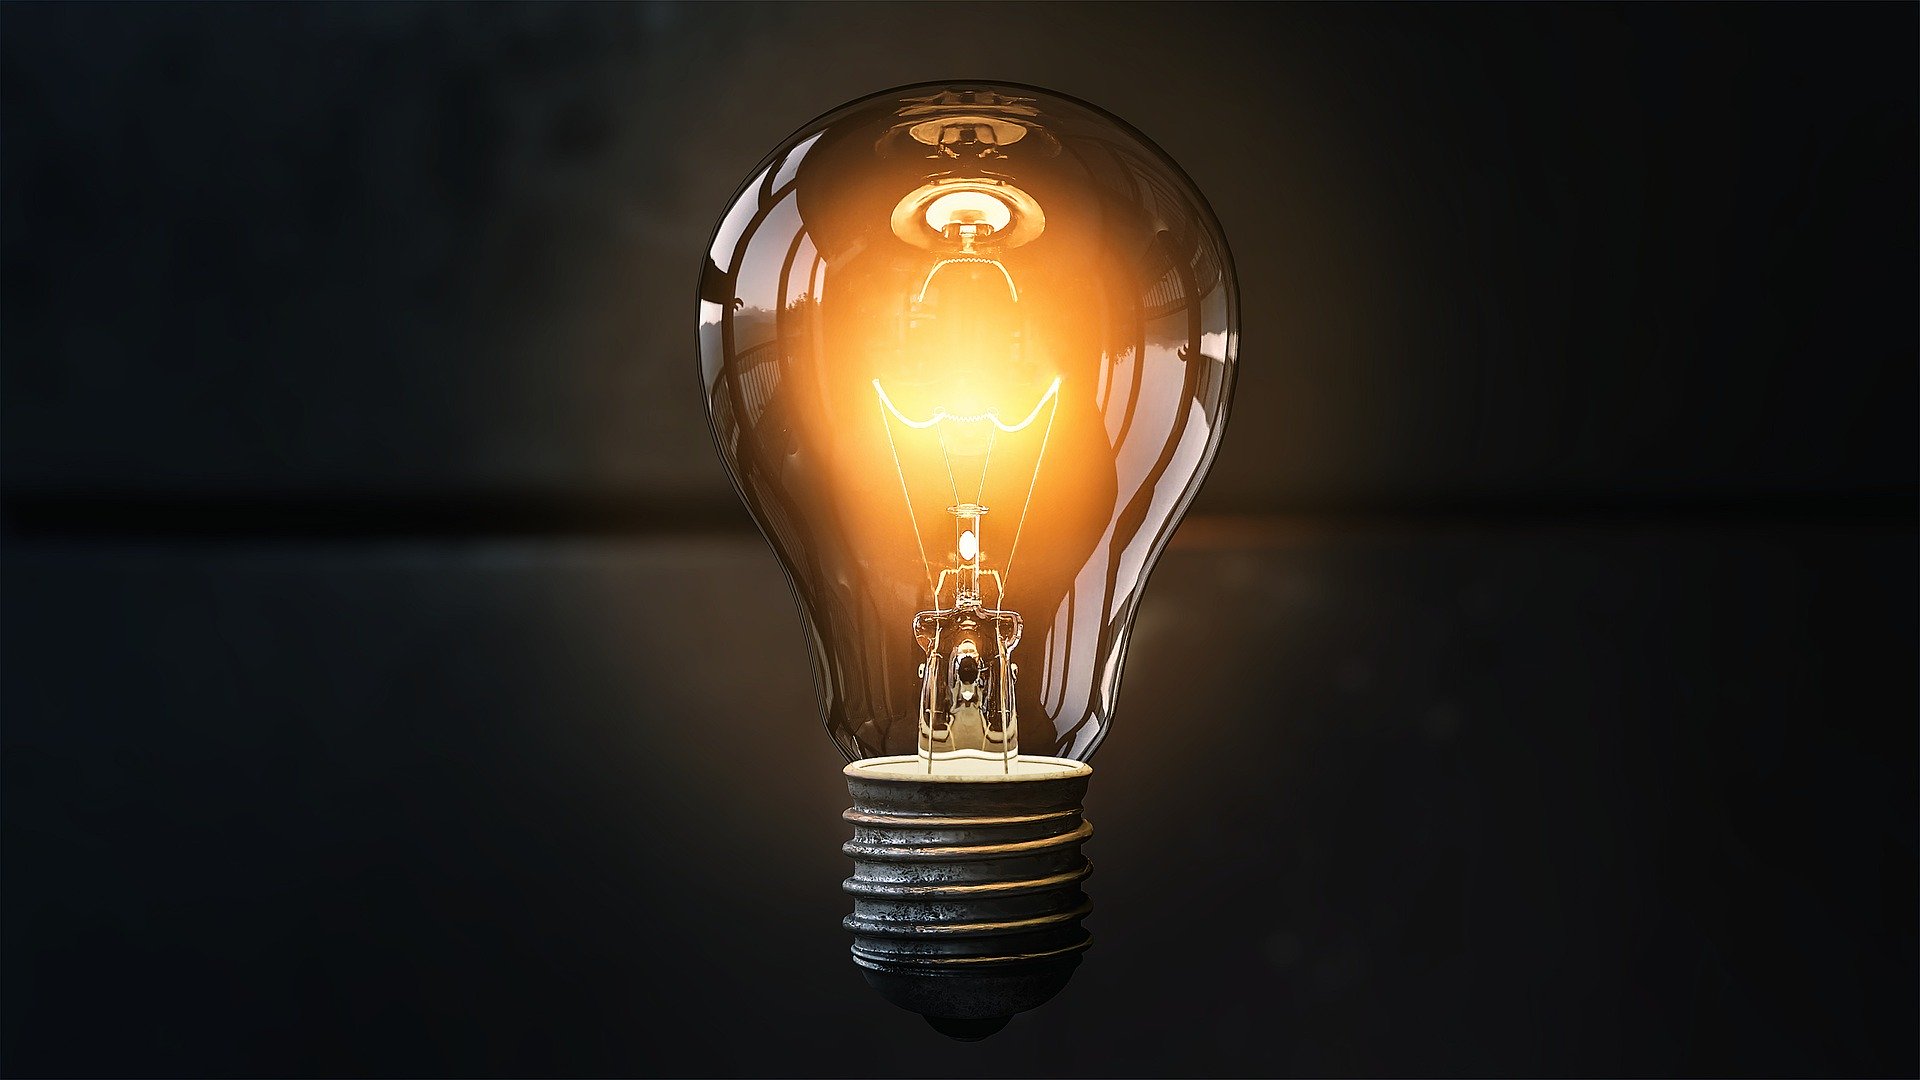 A single light bulb, illuminated